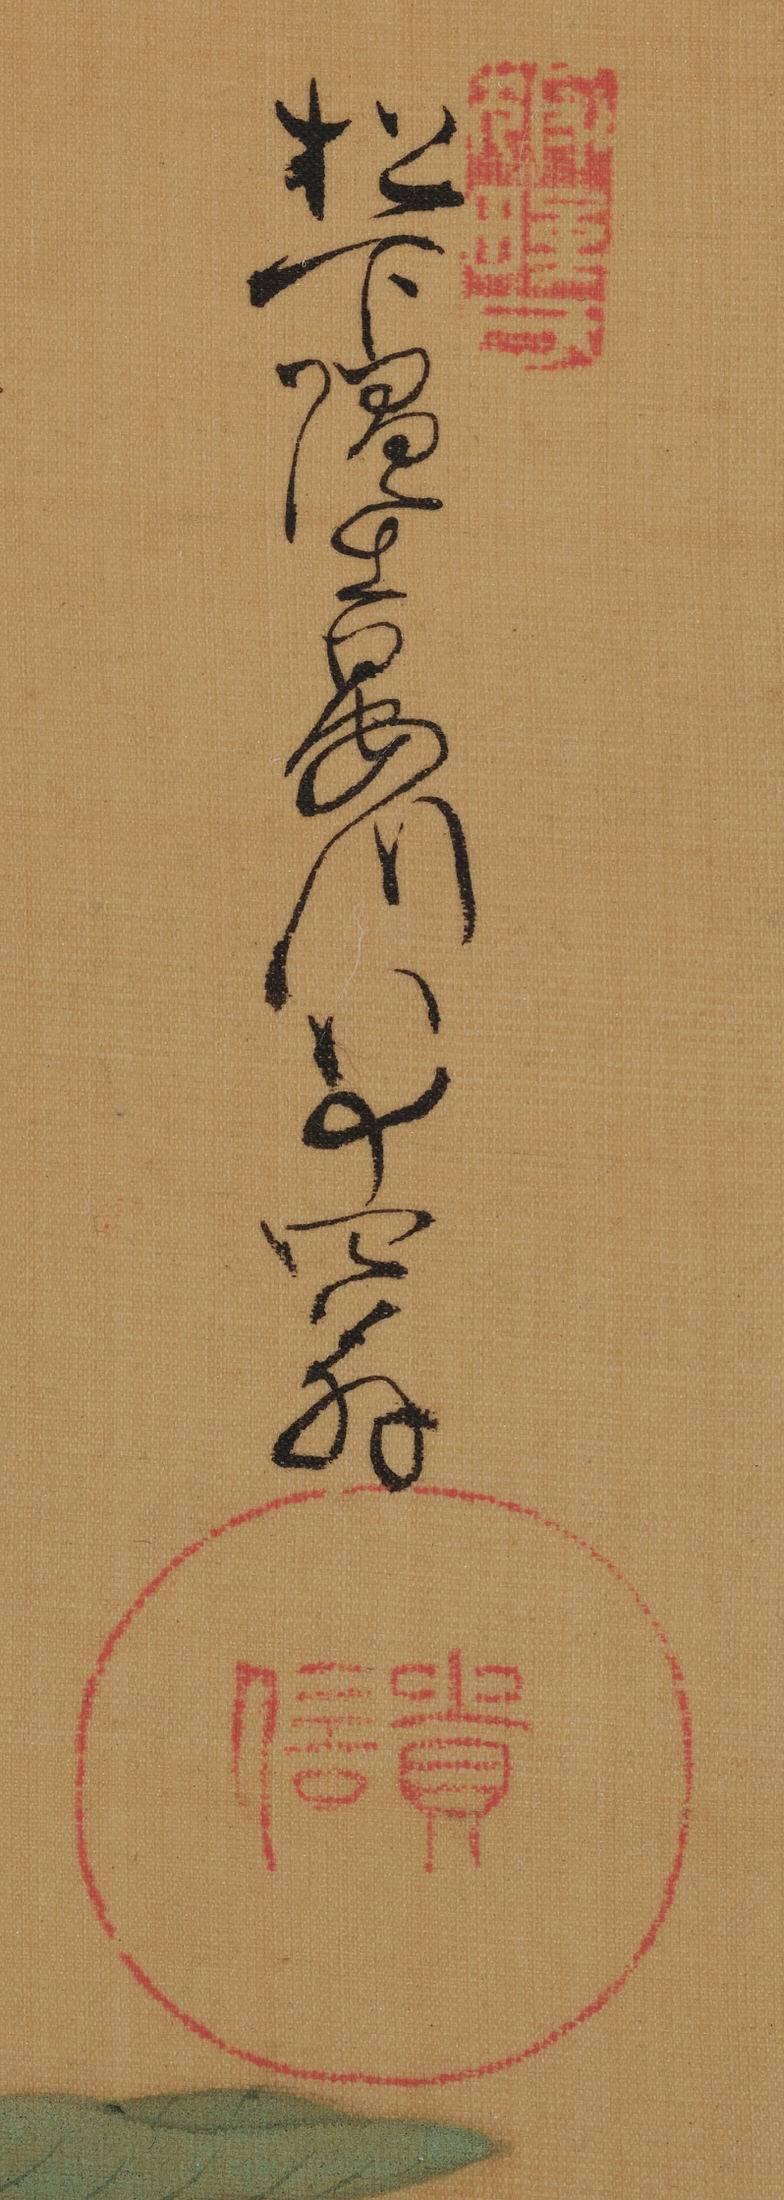 Hand-Painted Kano Ansen Takanobu, Flowers and Birds, Japanese Scroll Painting